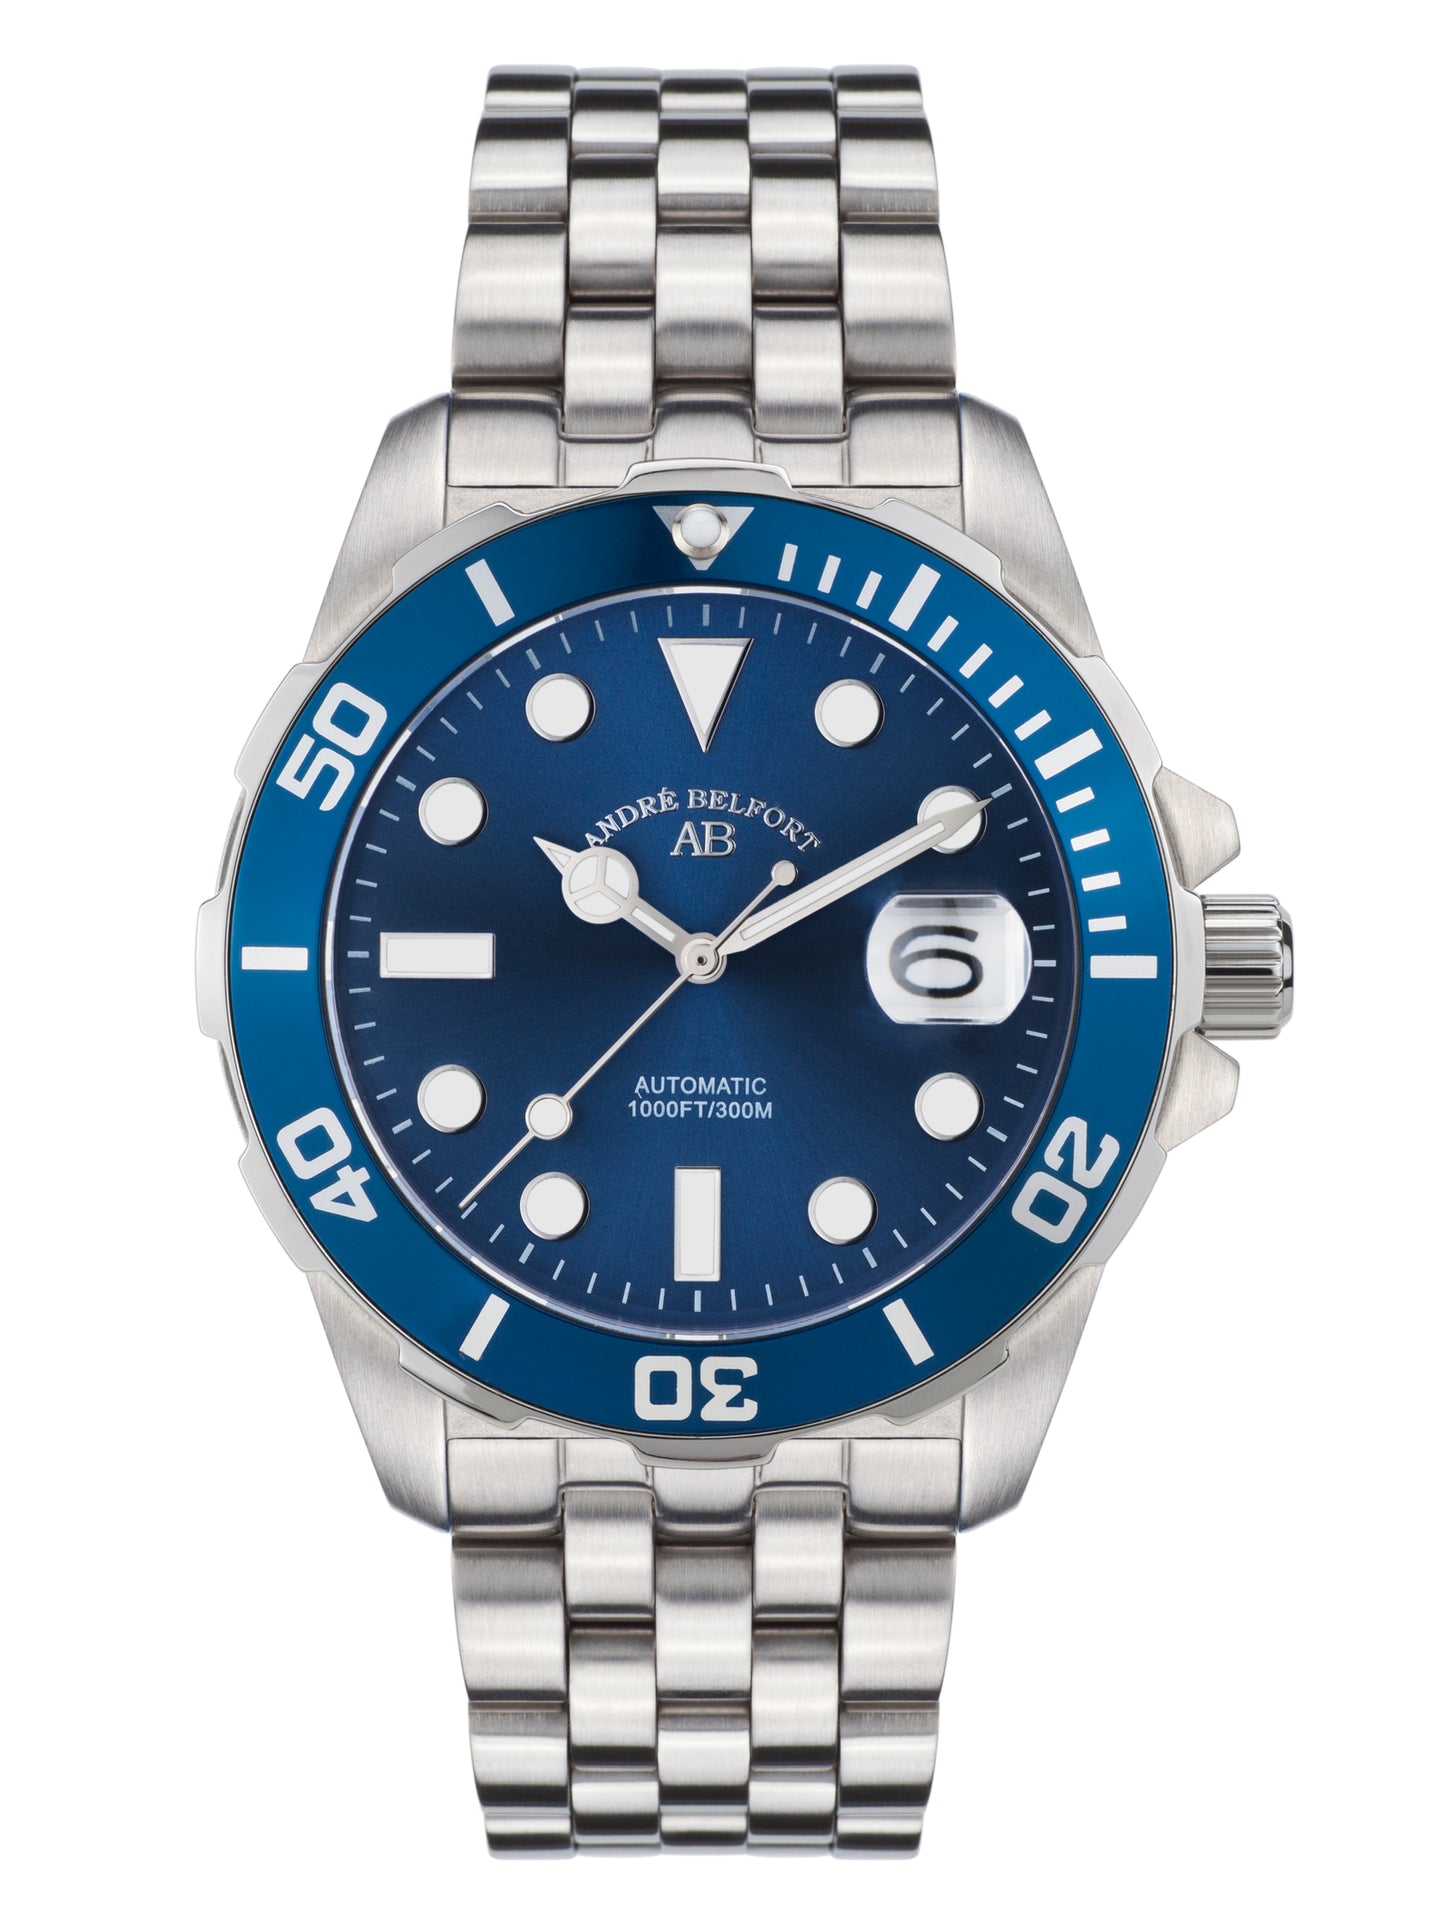 Automatic watches — Sous les mers — André Belfort — steel blue